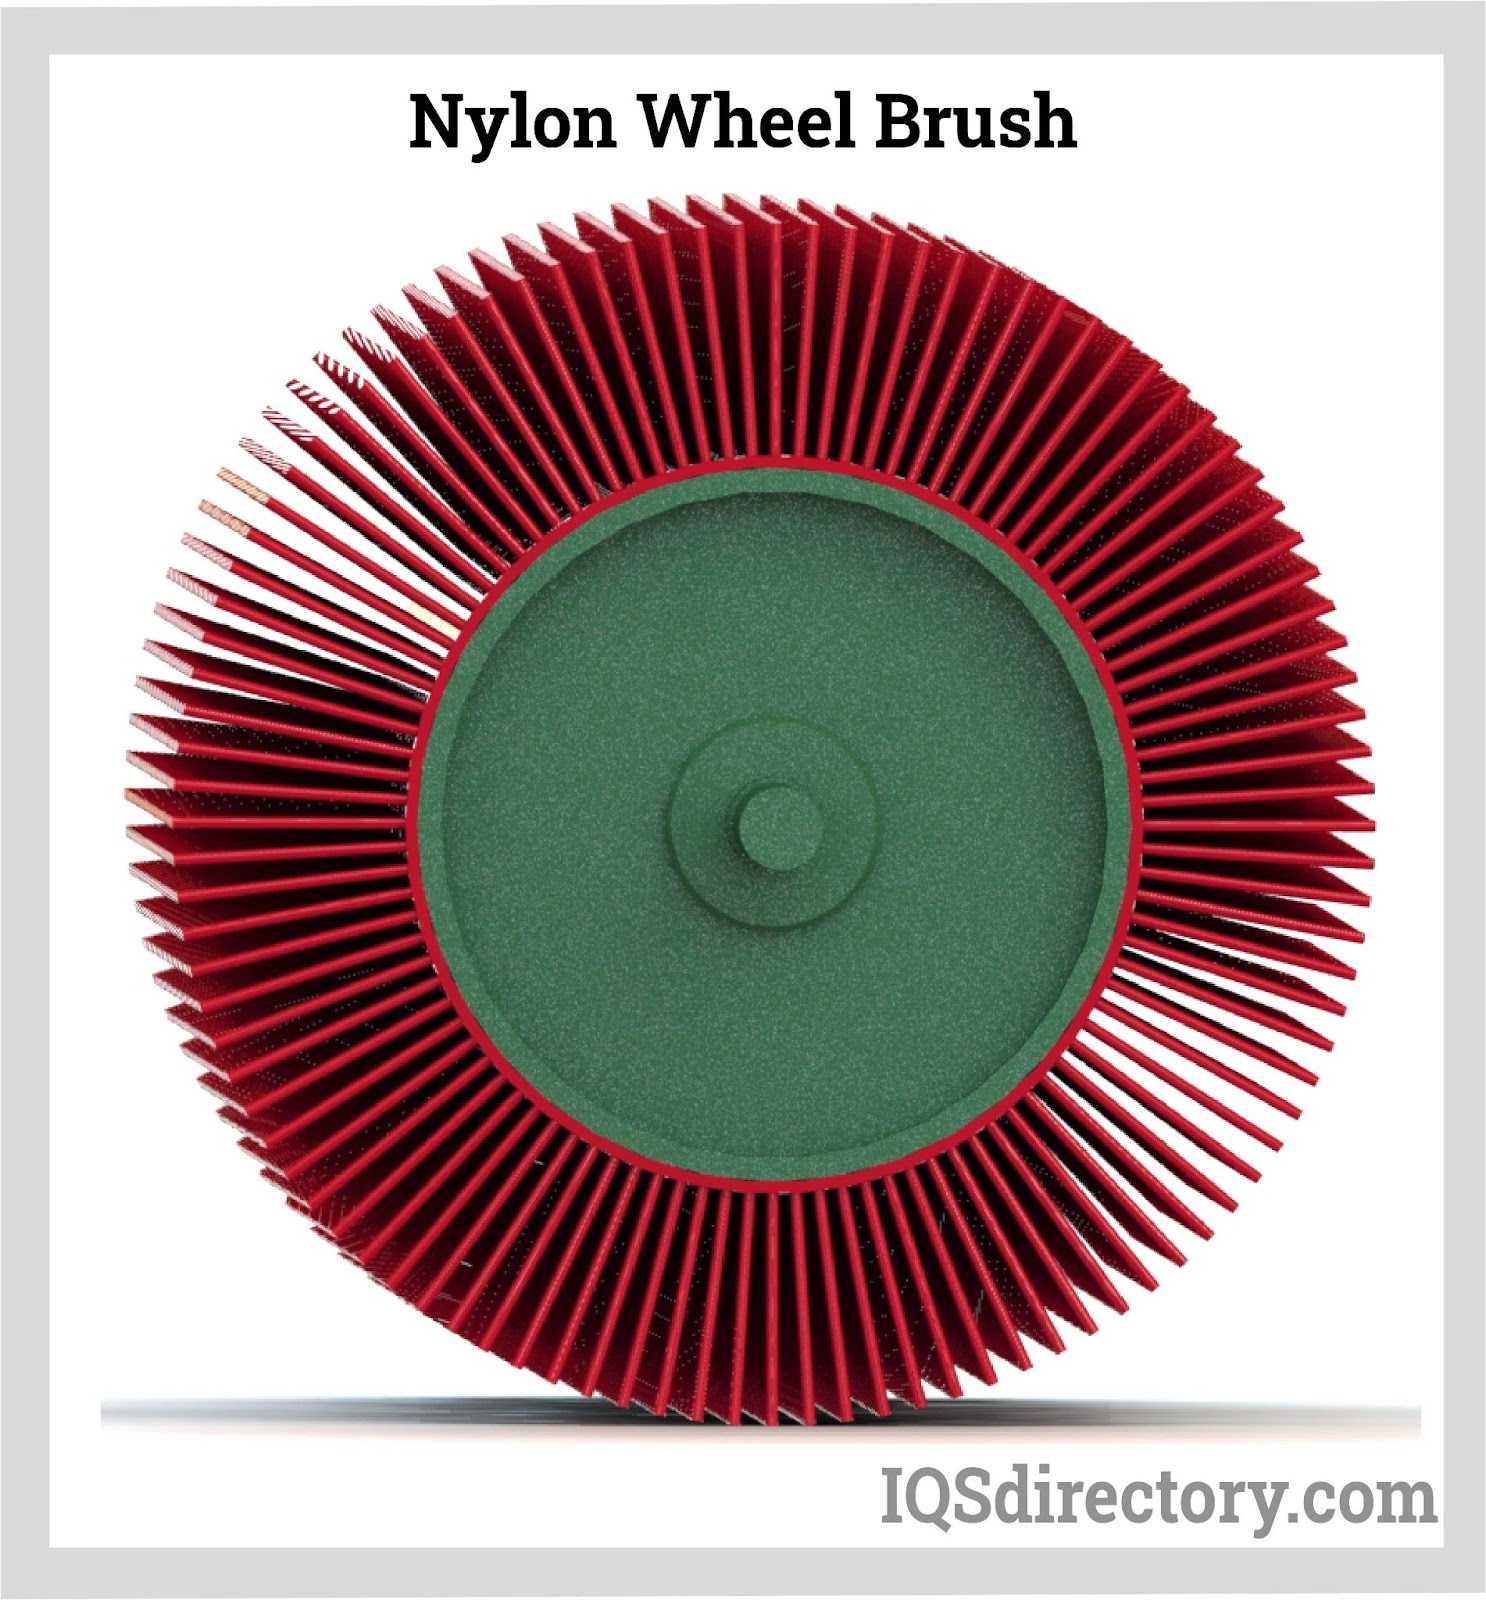 Nylon Wheel Brush